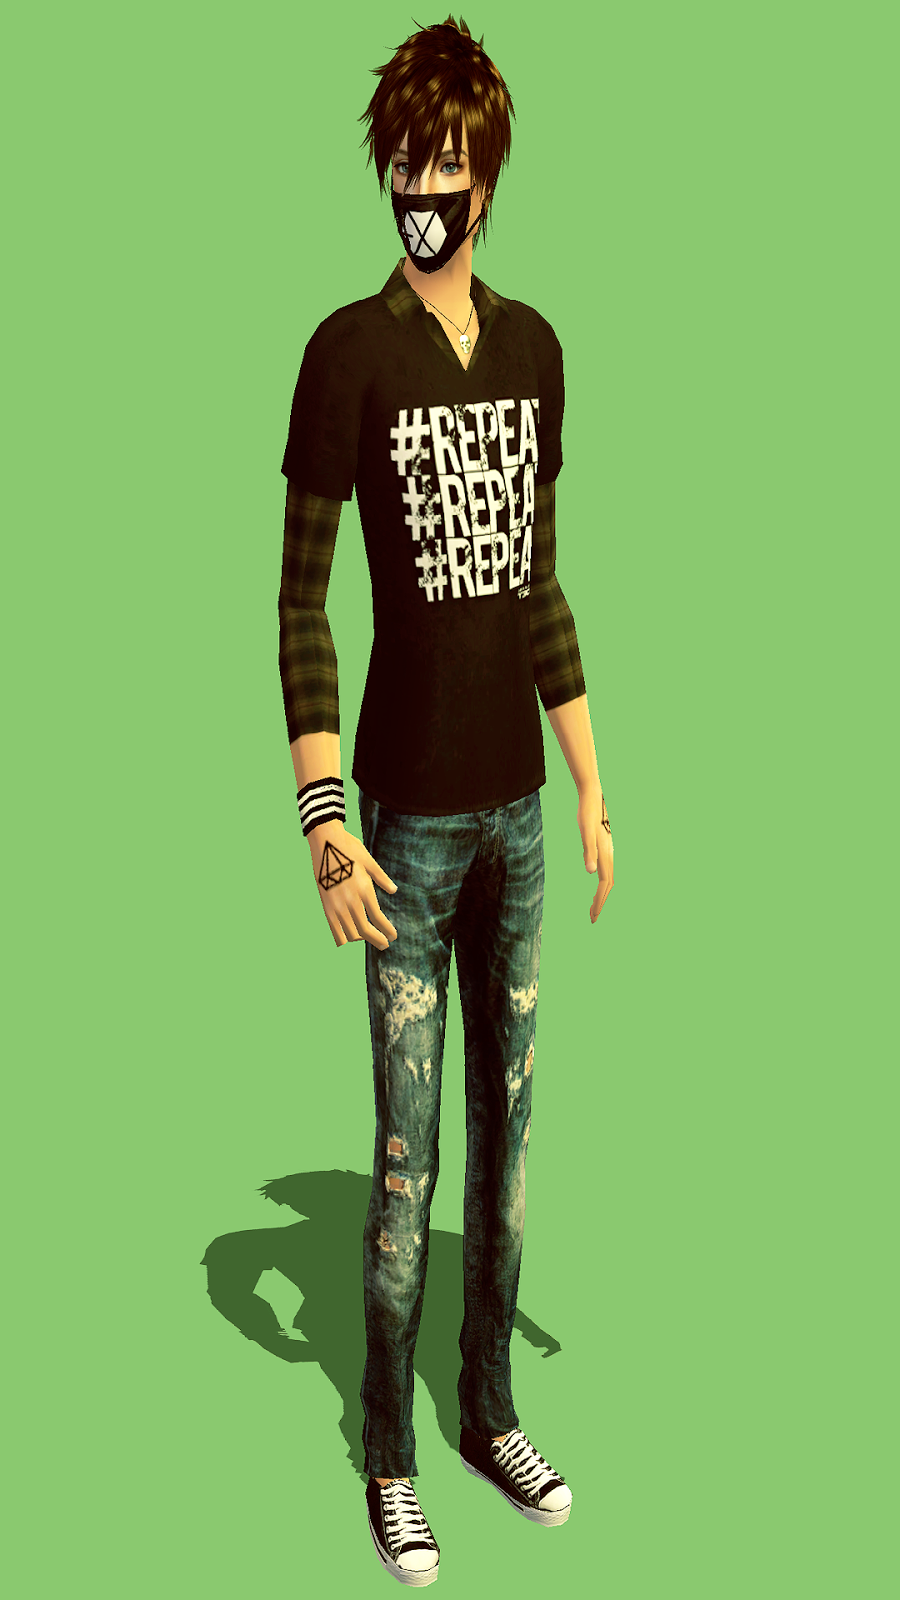  The Sims 2. Мужская одежда: повседневная. - Страница 22 9